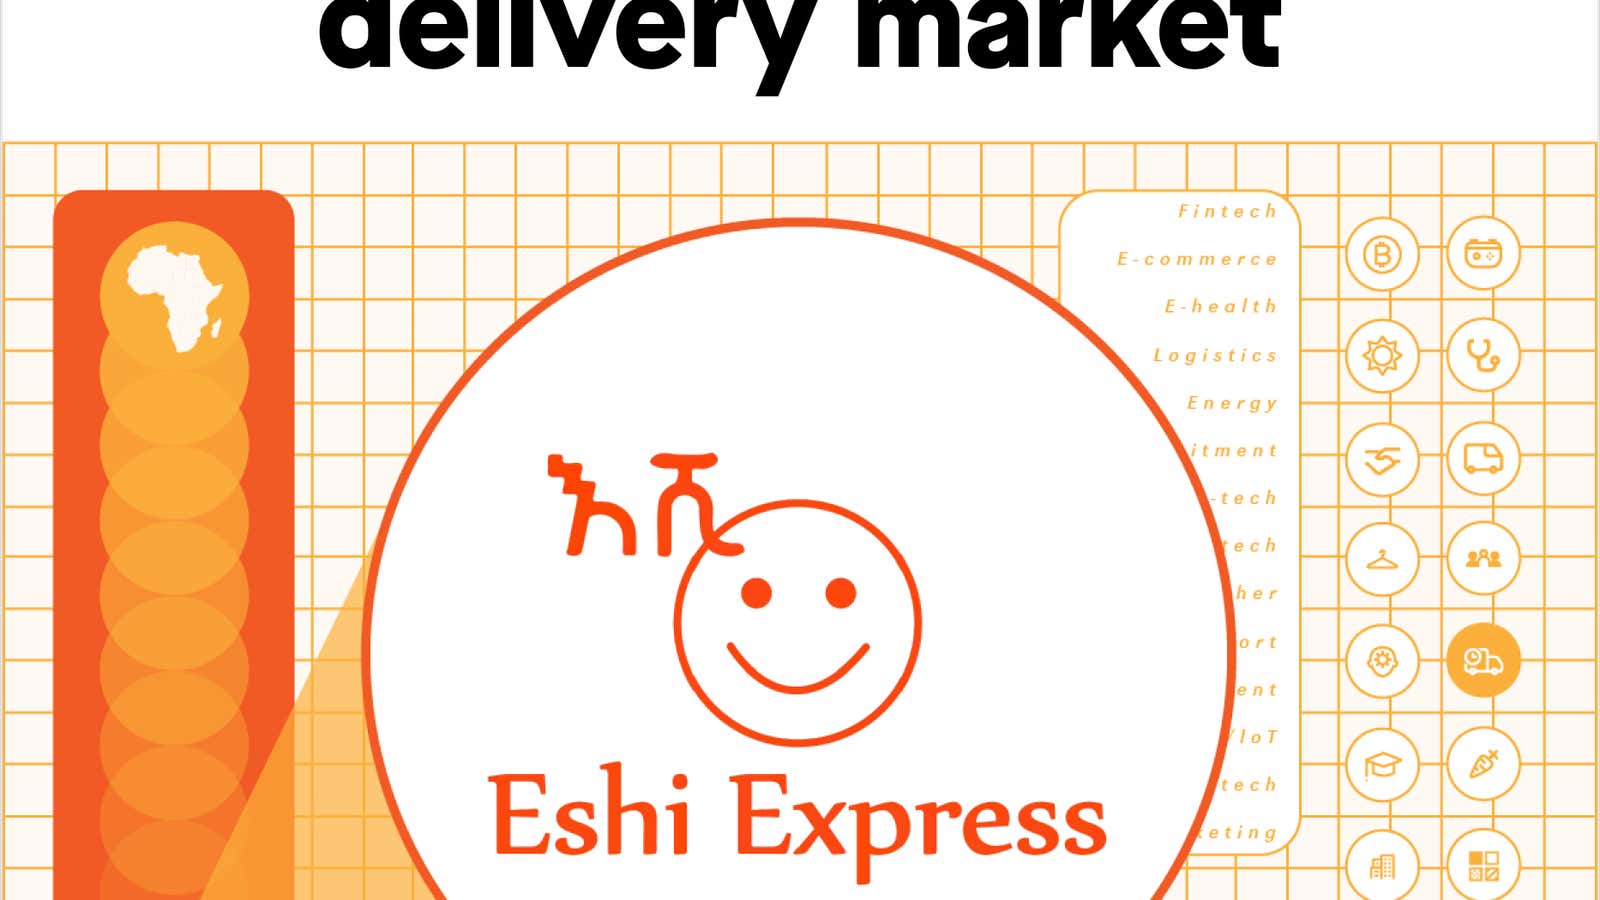 âœ¦ Cracking Ethiopia's delivery market